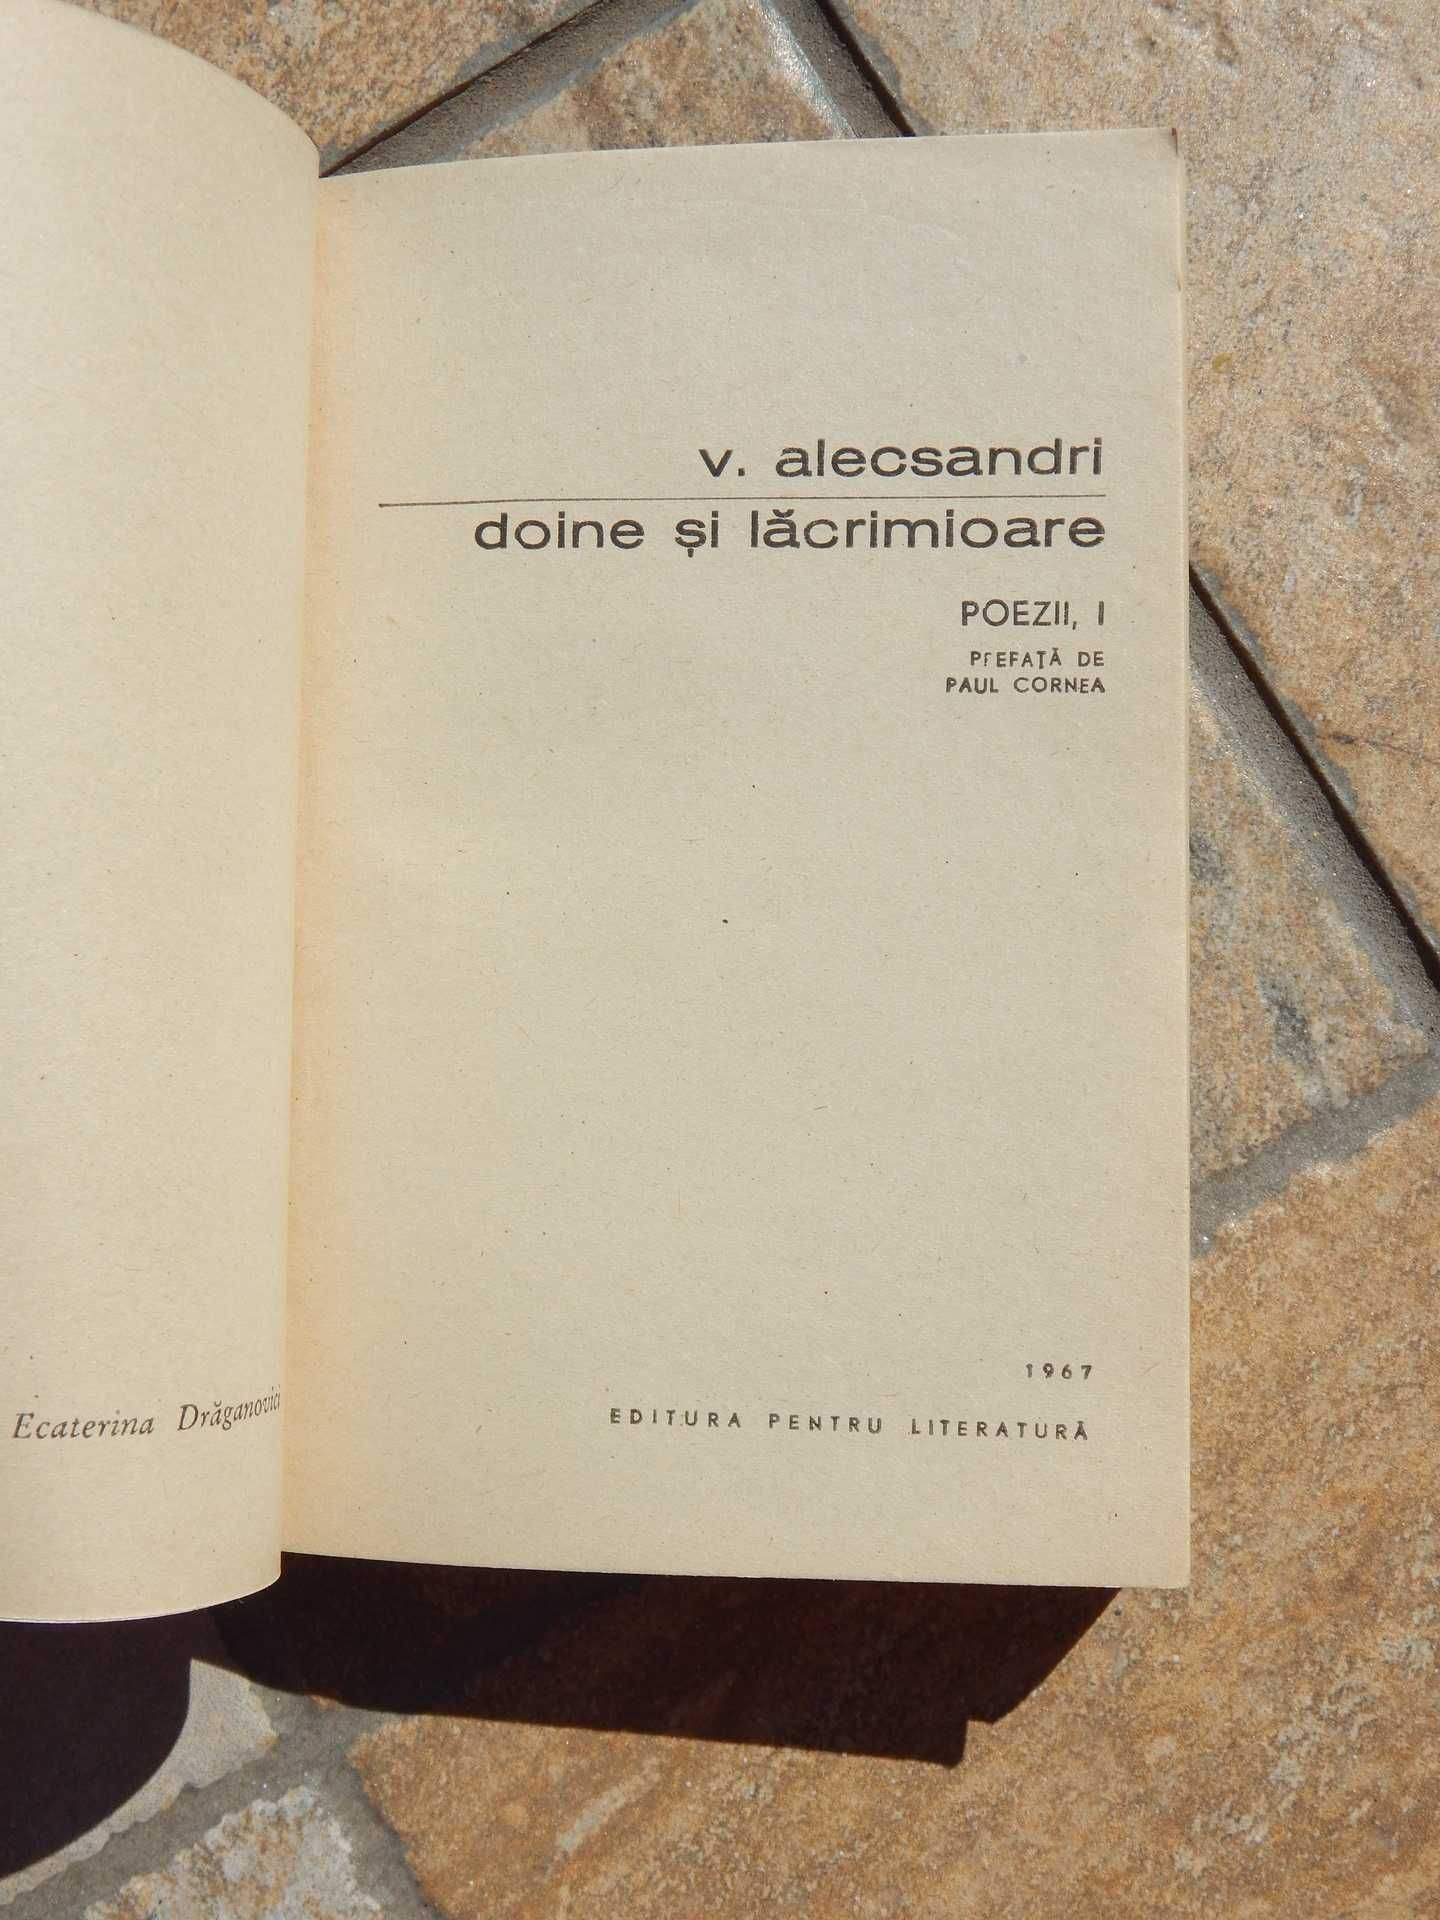 Doine si lacramioare Vasile Alecsandri poezii BPT 1967